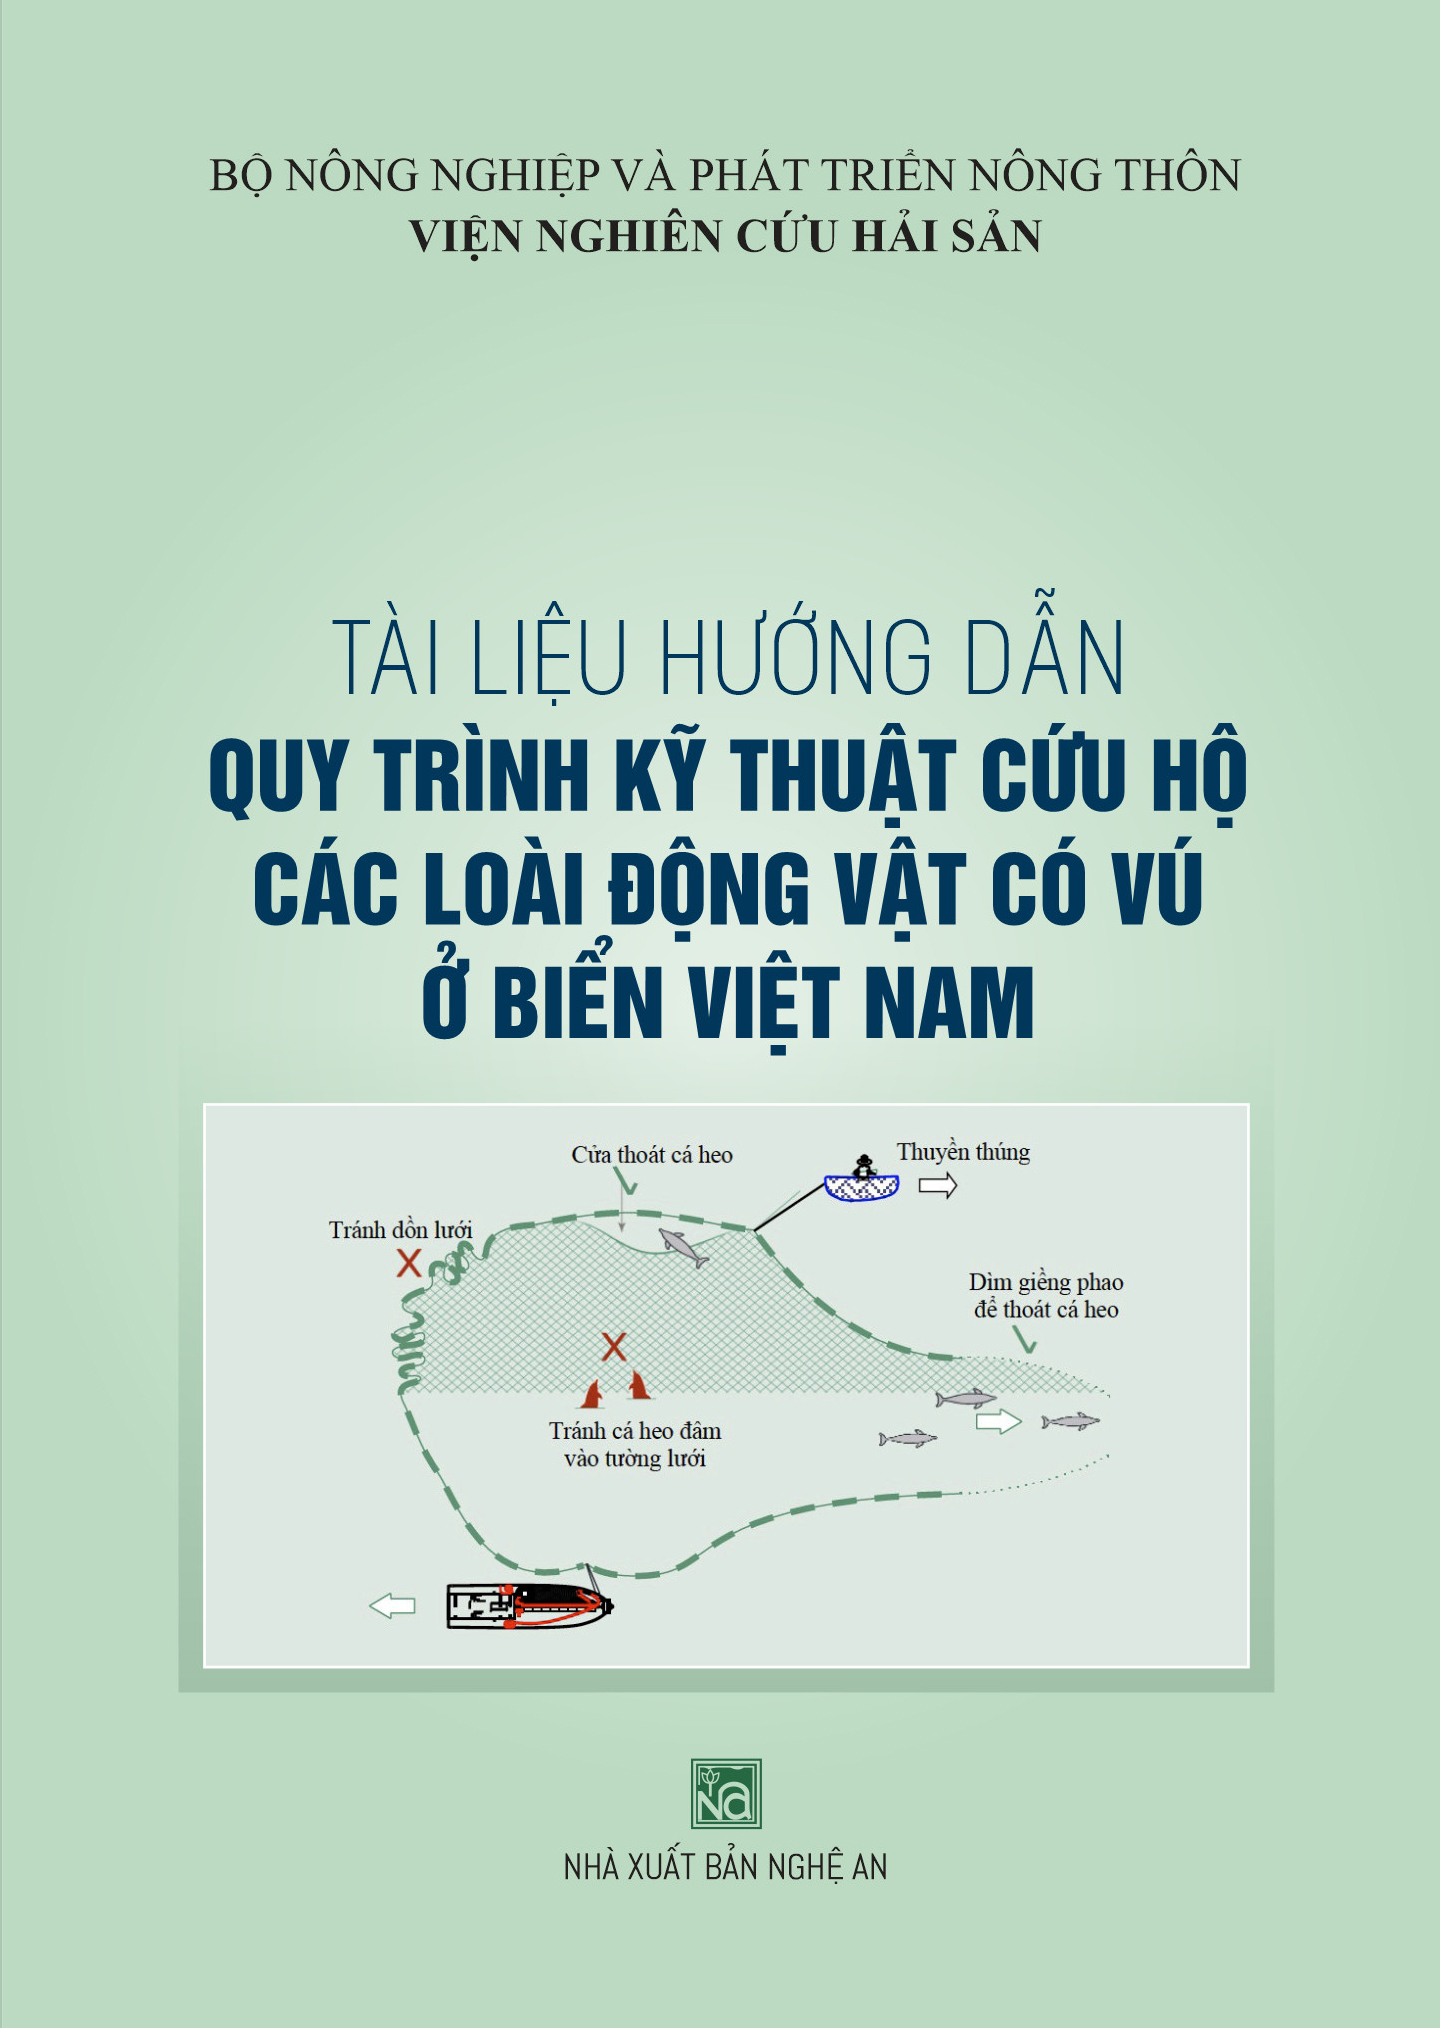 The manual of marine mammal rescue in Vietnam